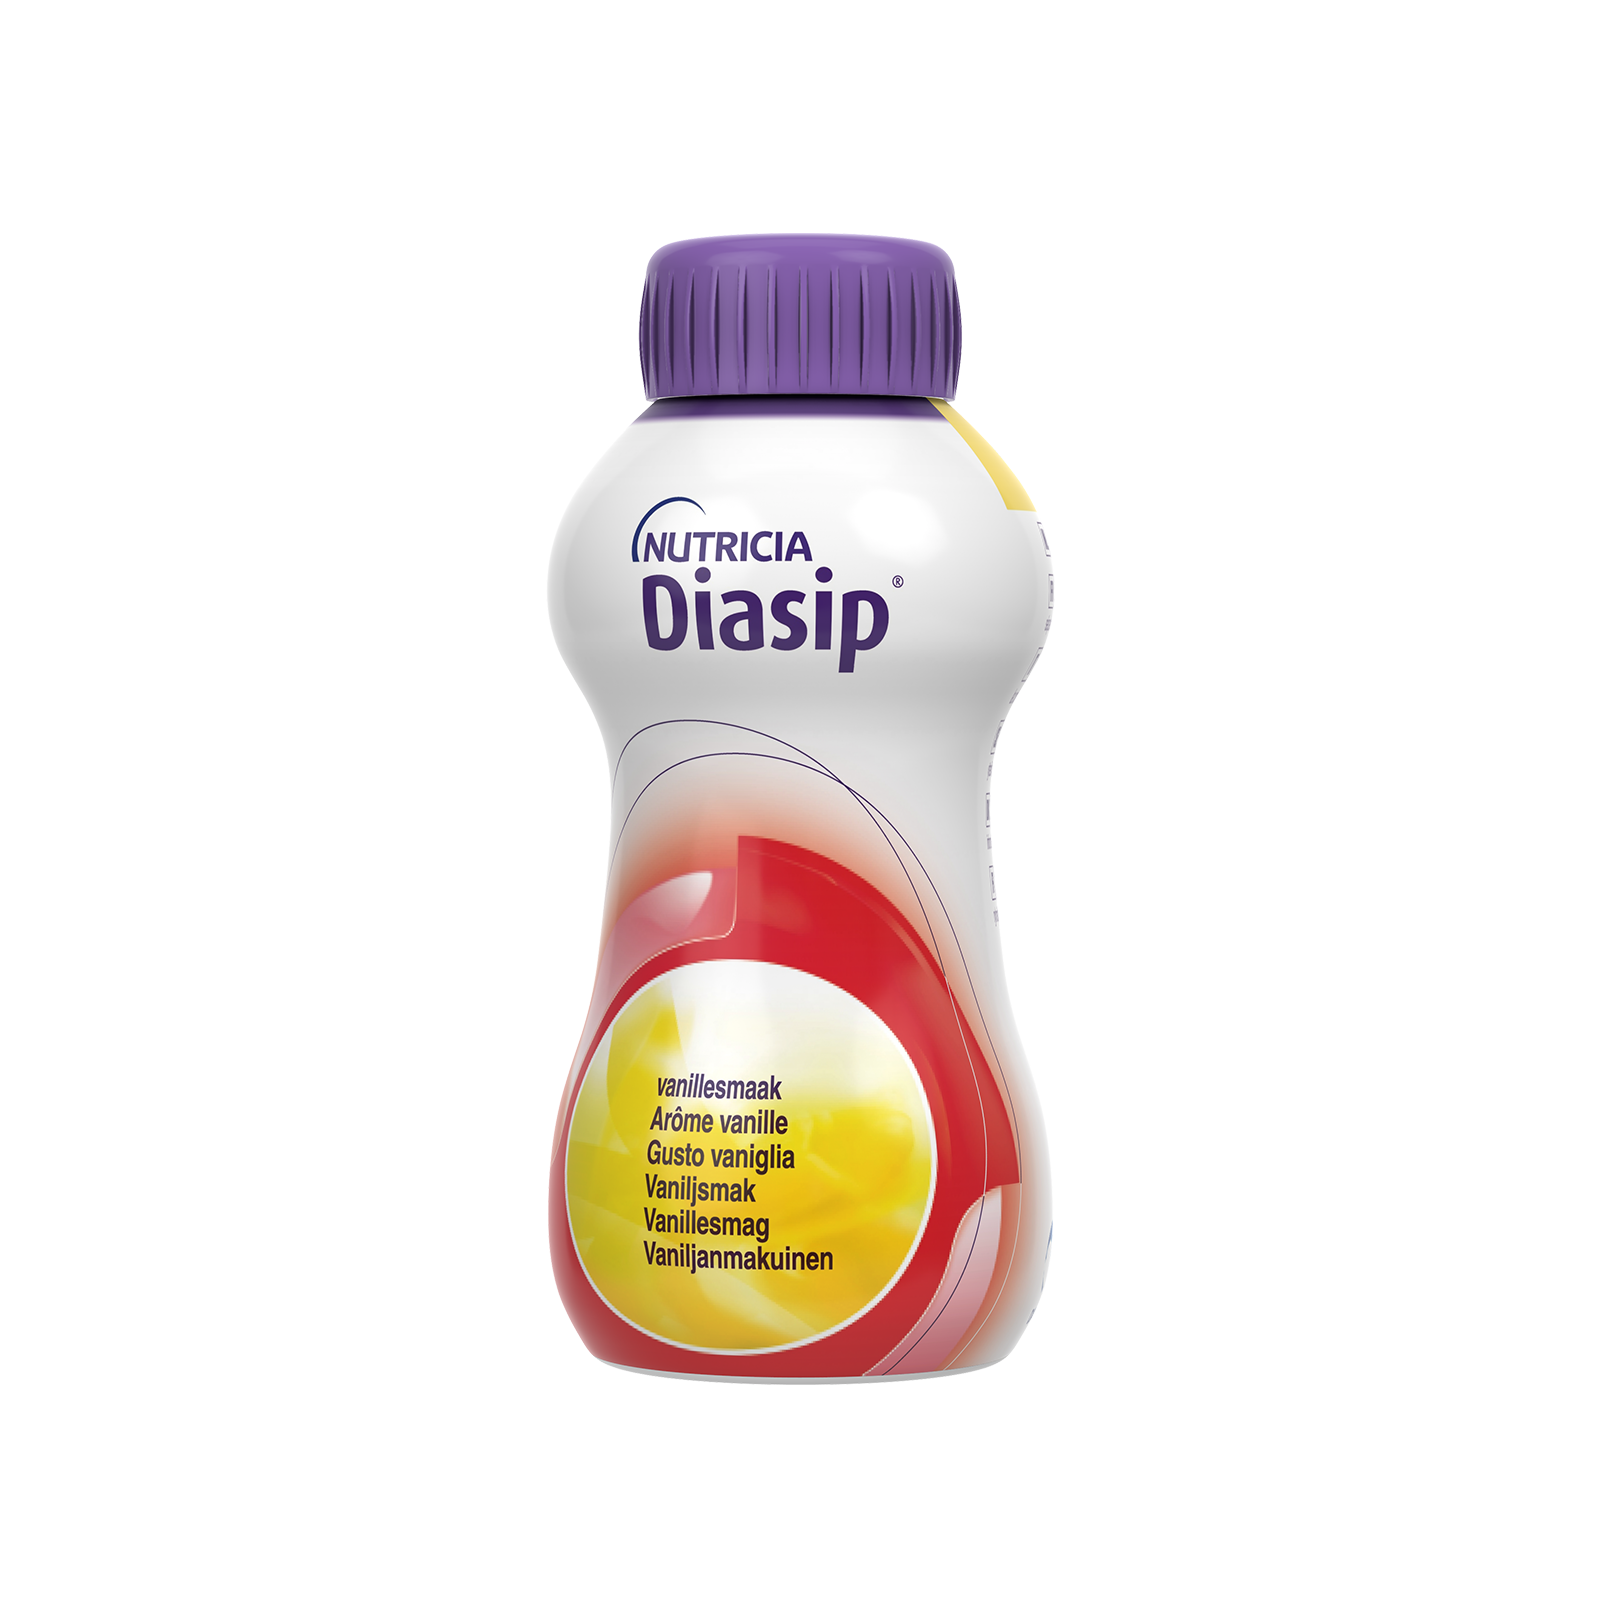 Diasip Vaniglia 24x Bottiglia da 200 ml | Nutricia